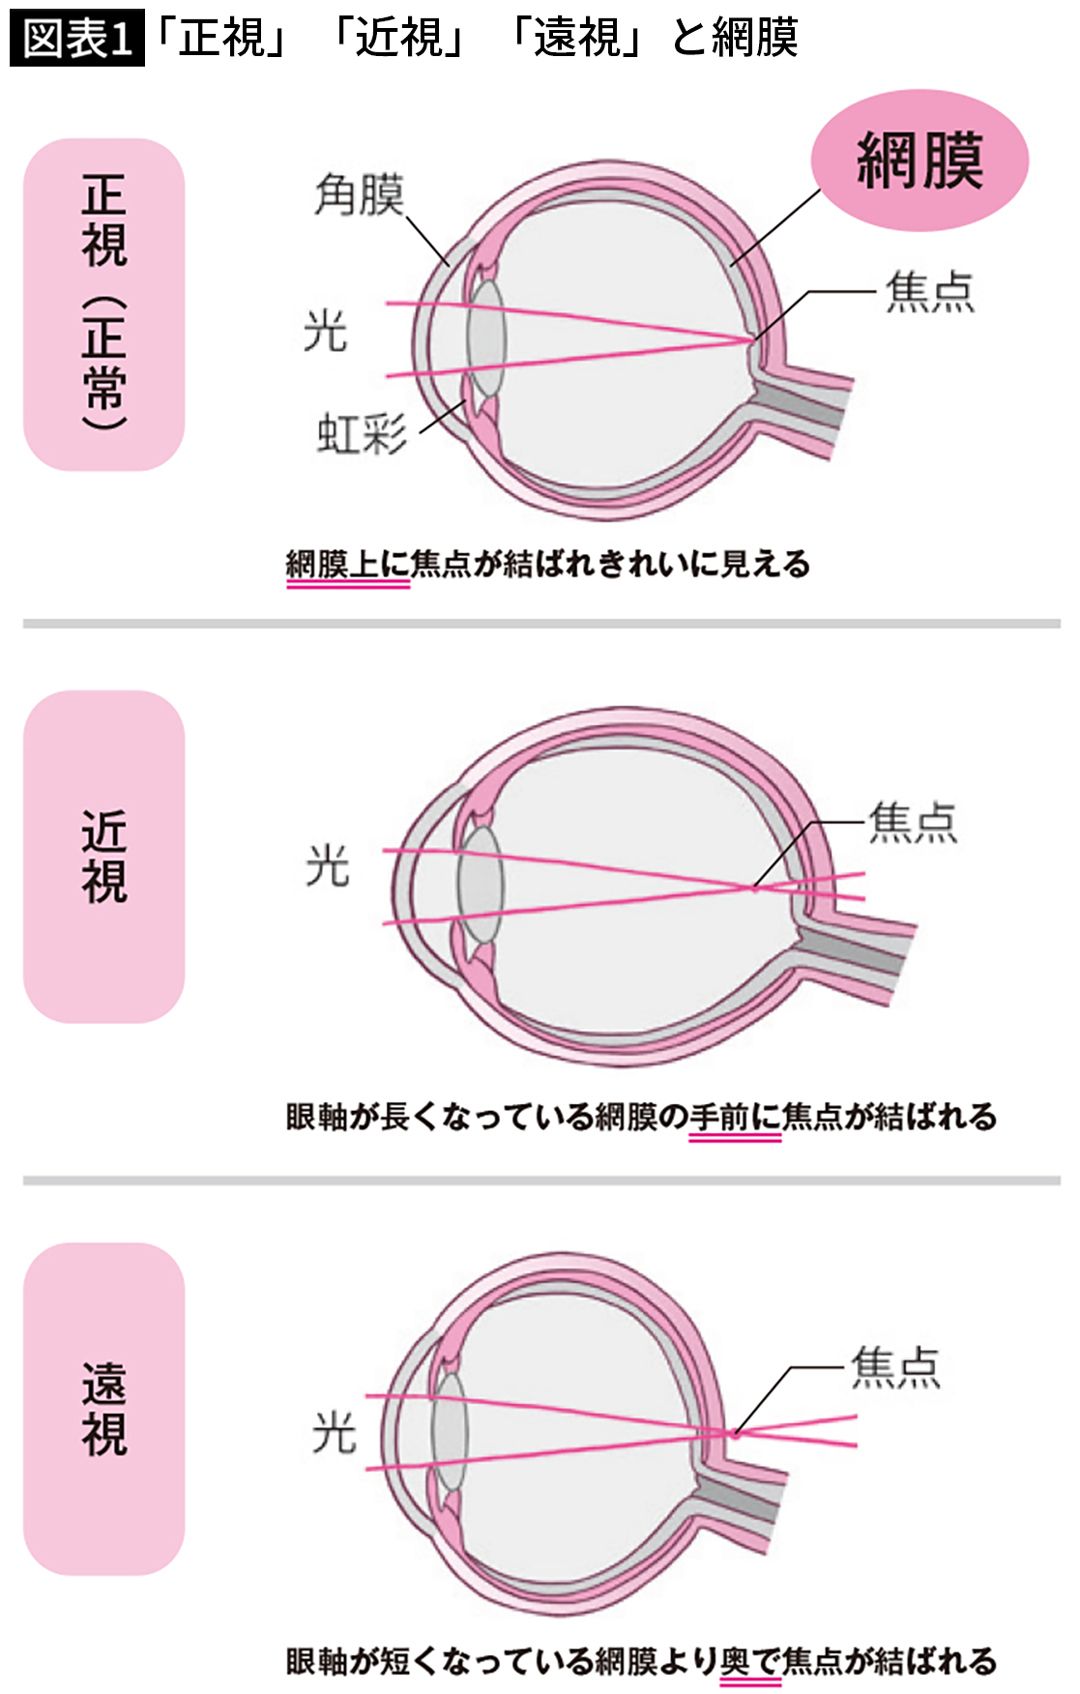 【図表】「正視」「近視」「遠視」と網膜